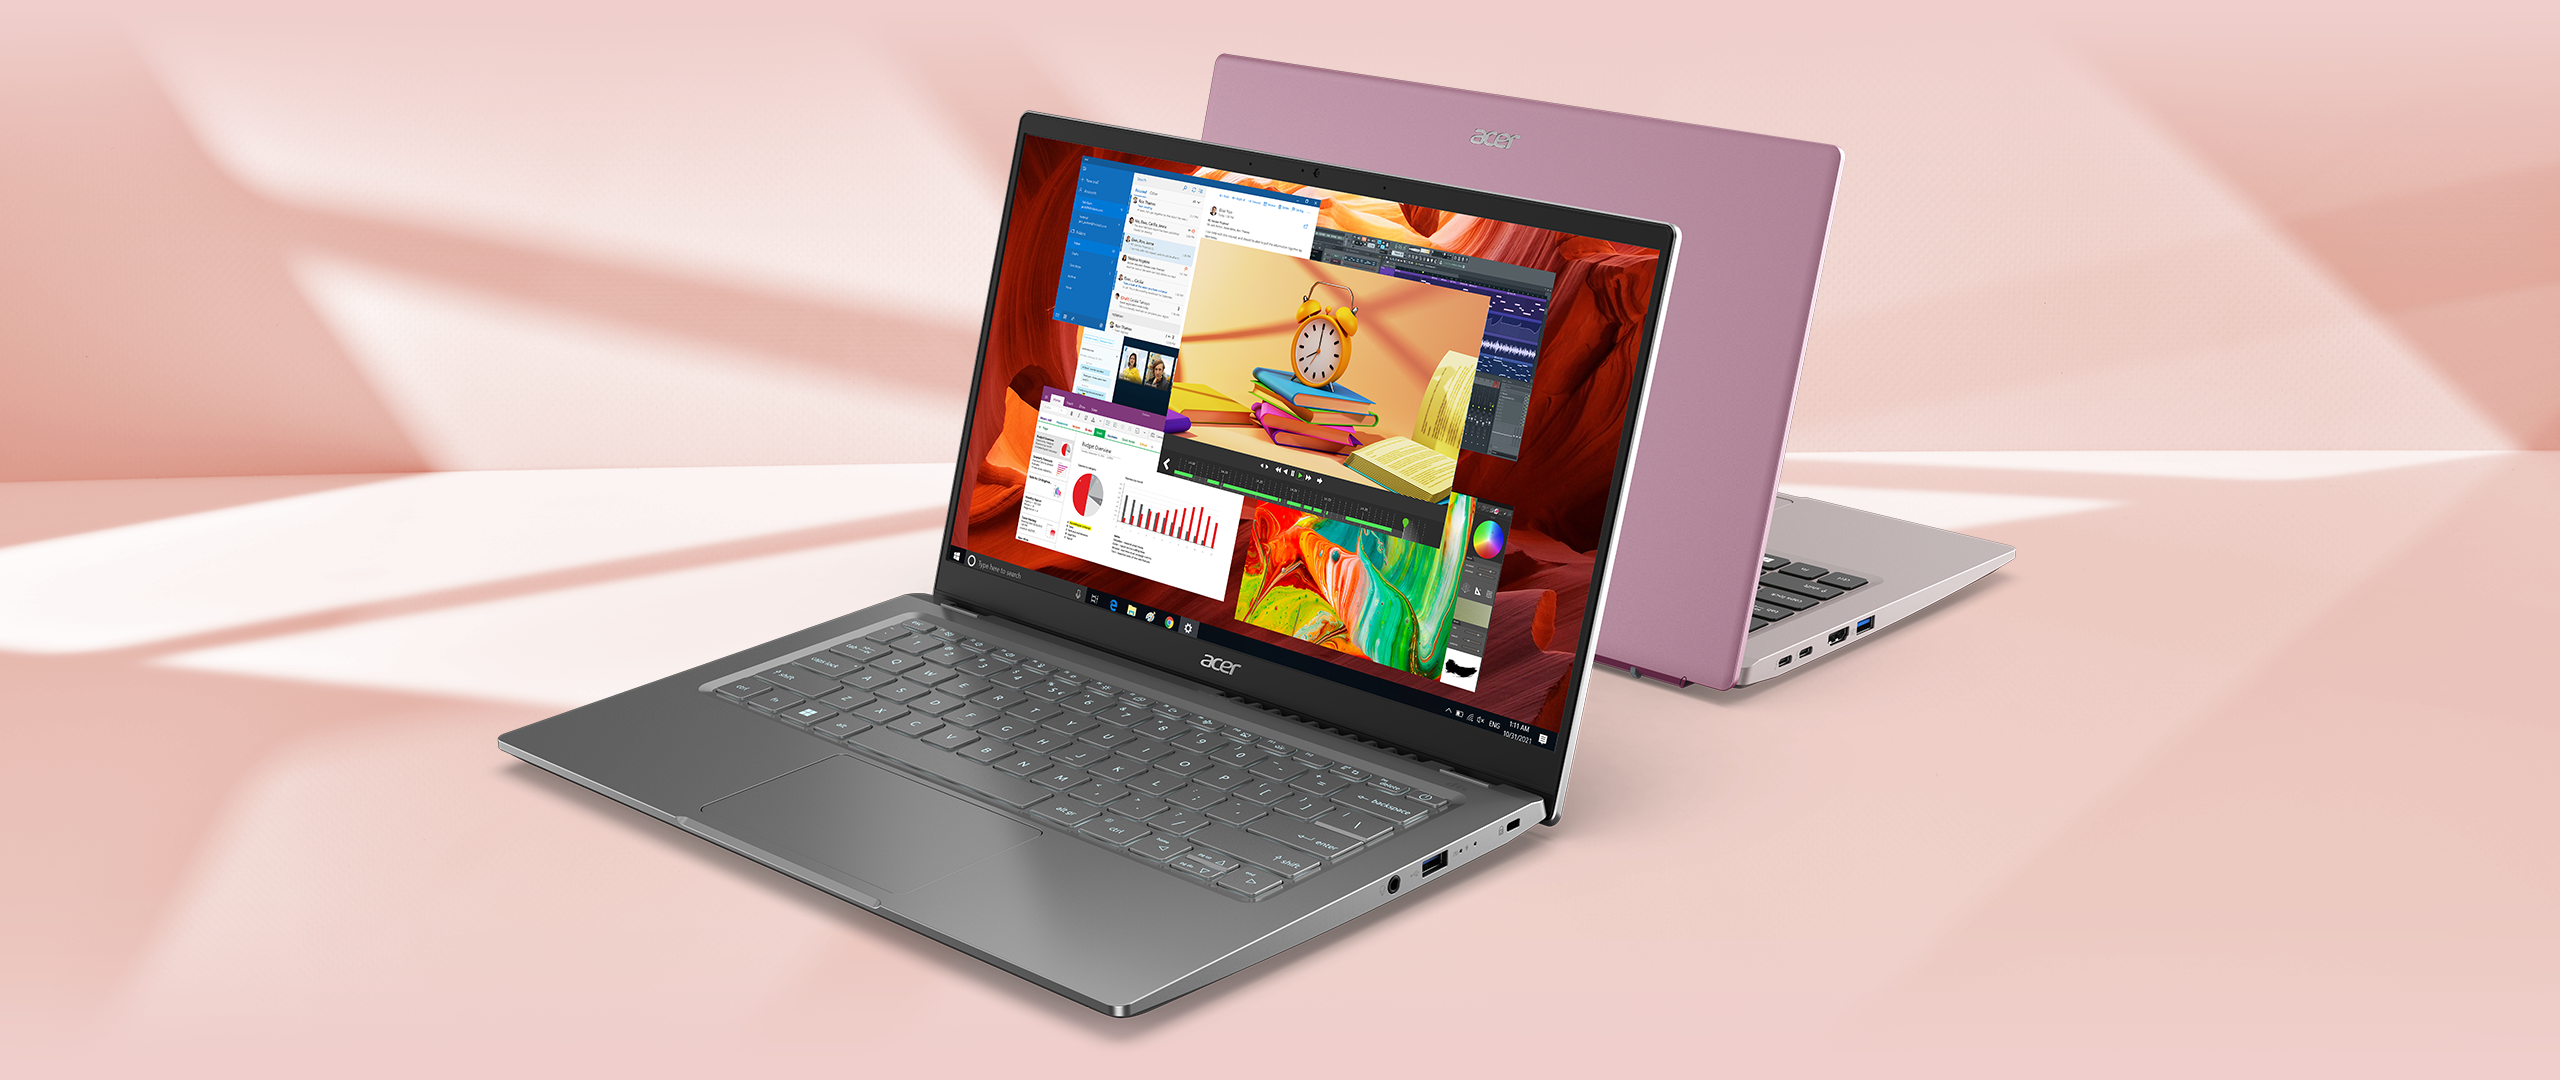 acer-laptop-swift-3-kick-start-your-productivity-l